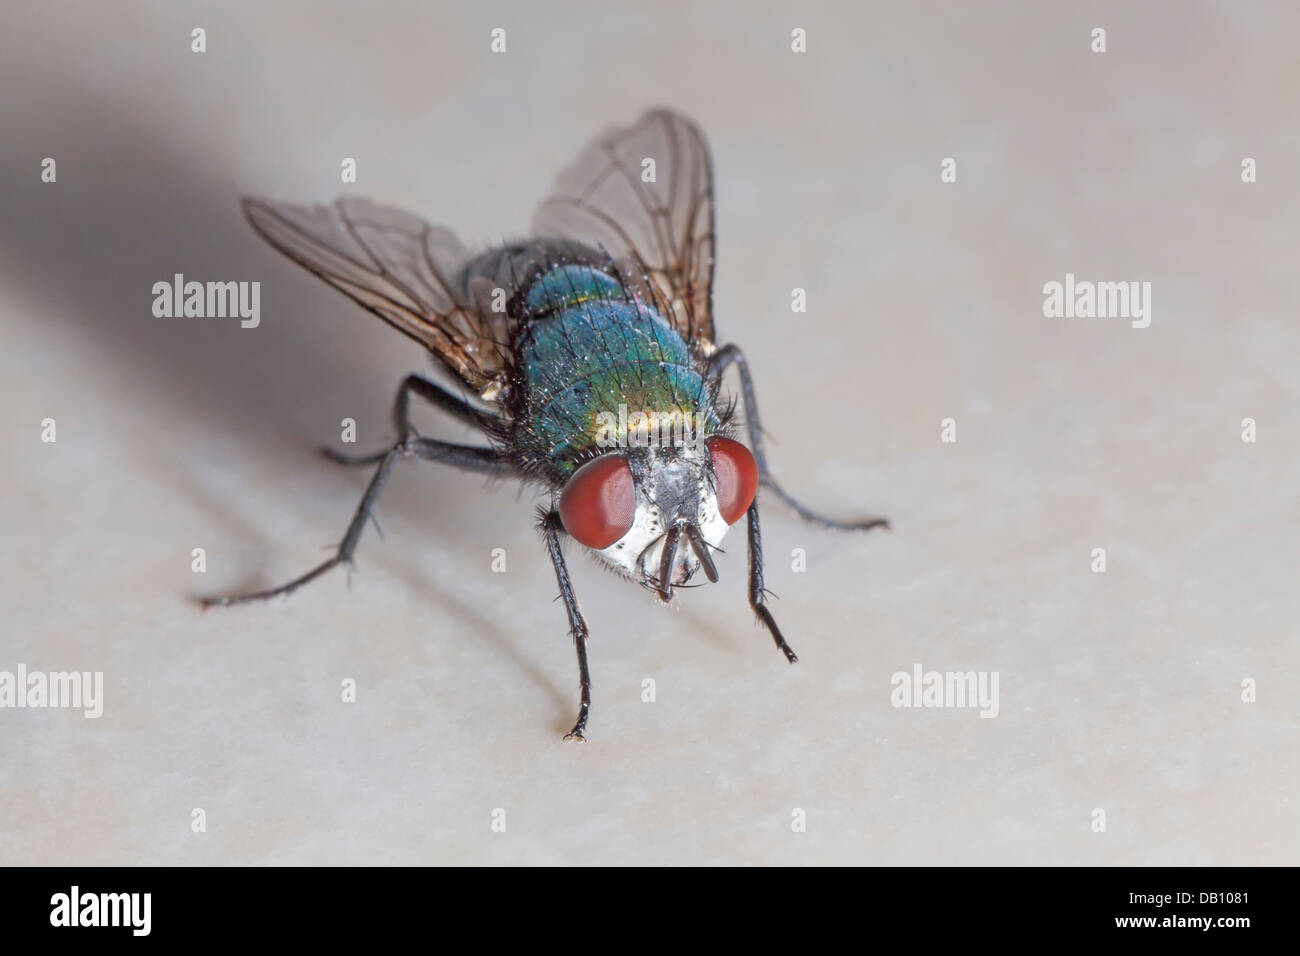 Common housefly, Musca domestica, close-up macro Stock Photo